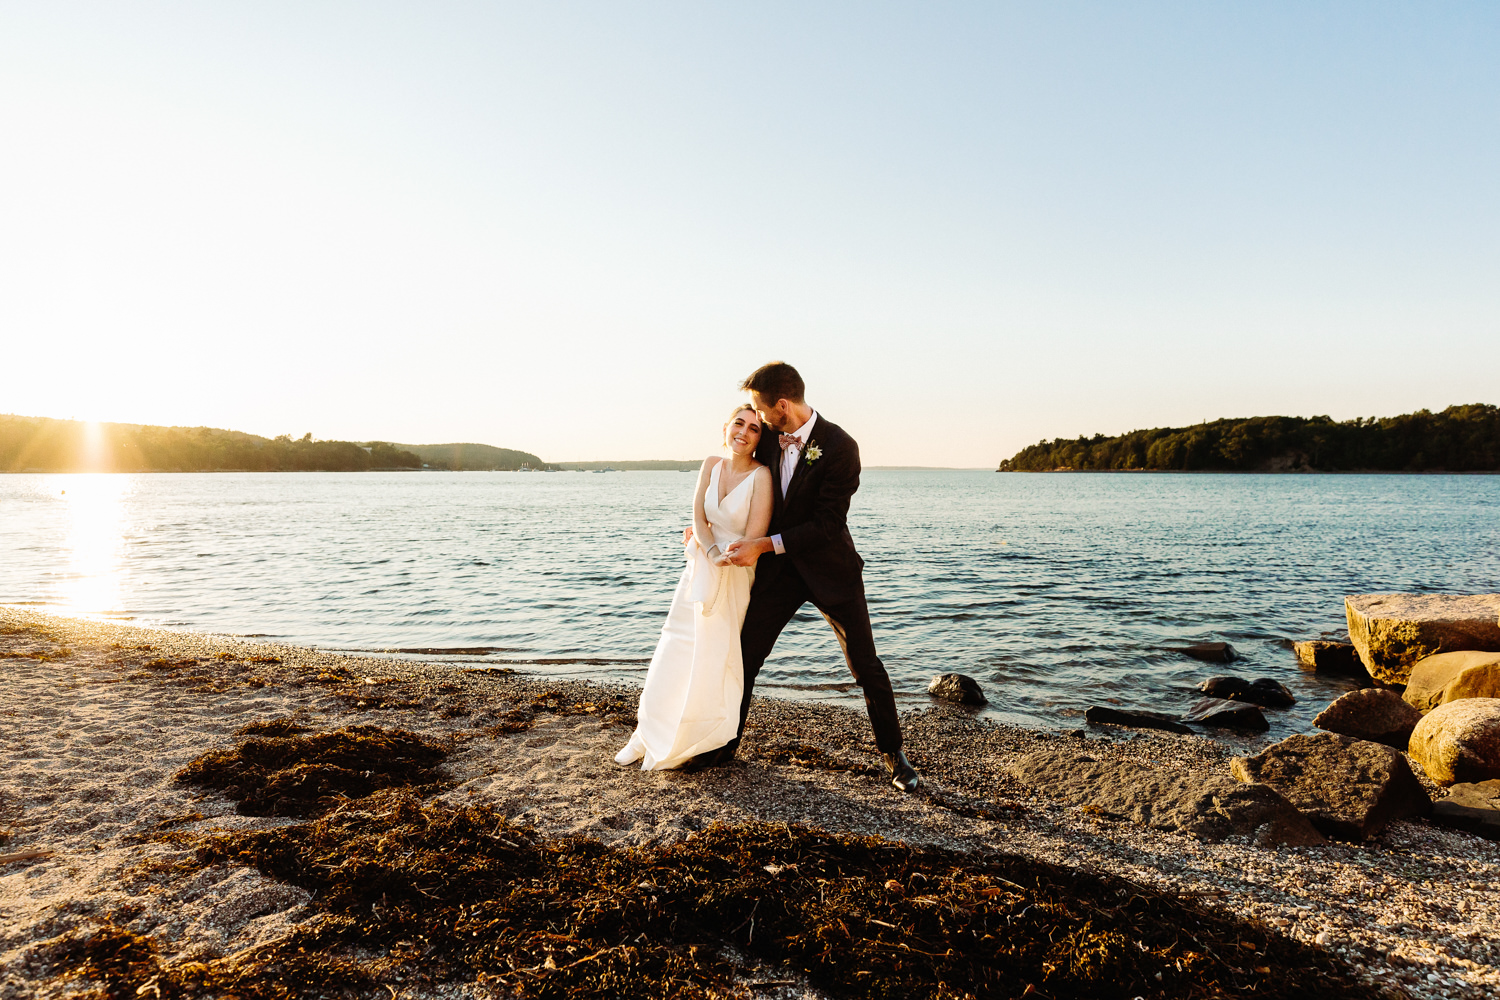 Bar Harbor and Acadia wedding portraits at sunset